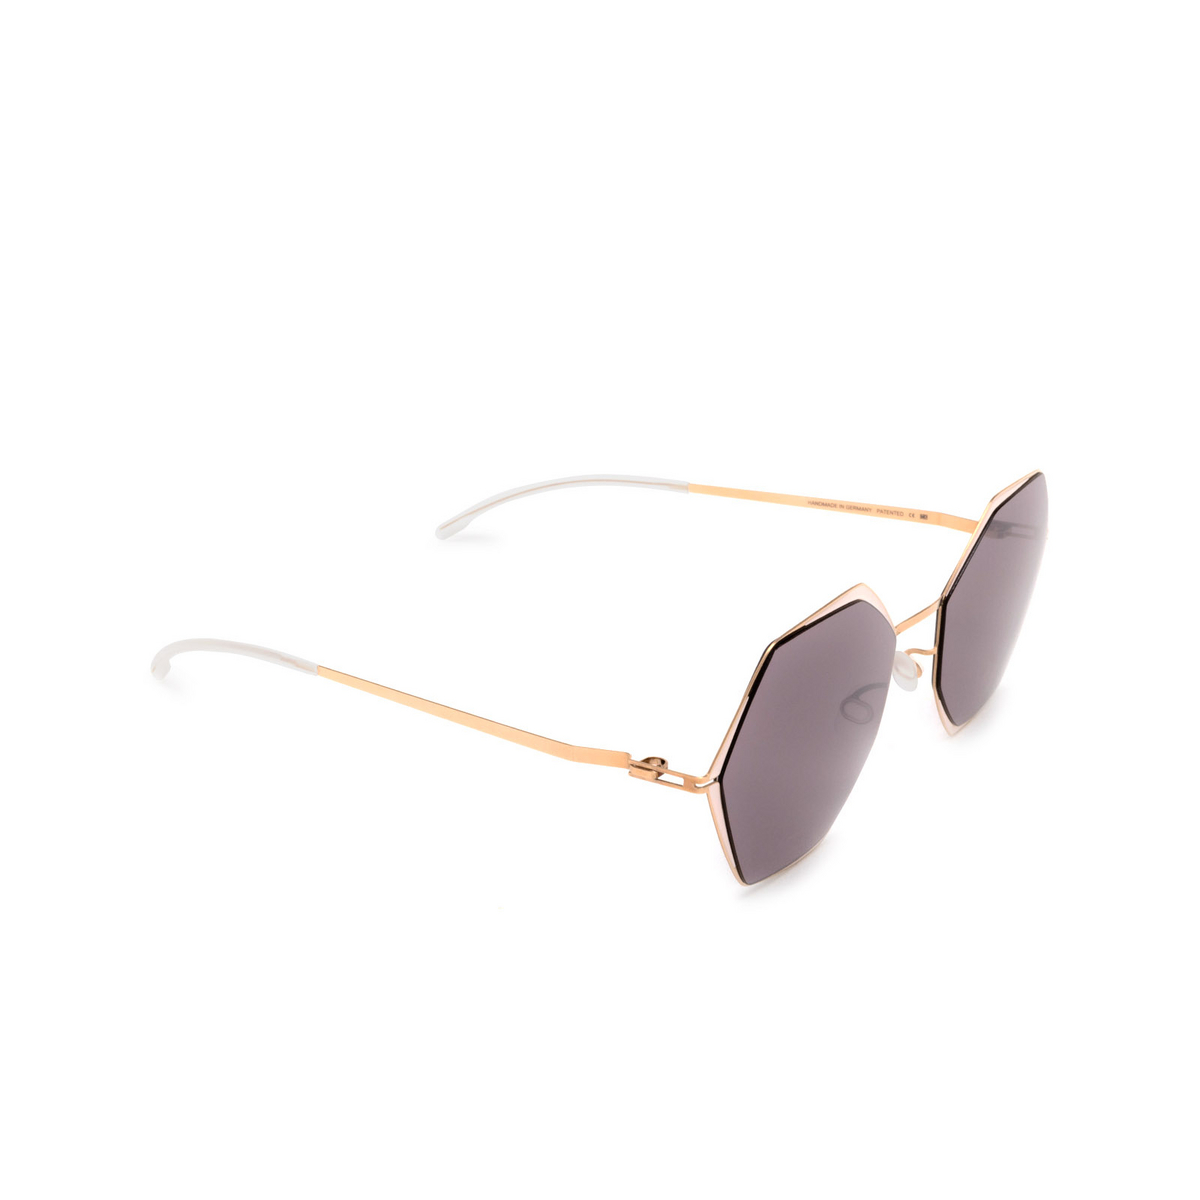 Mykita® Irregular Sunglasses: Alessia color 283 Champagne Gold/aurore - three-quarters view